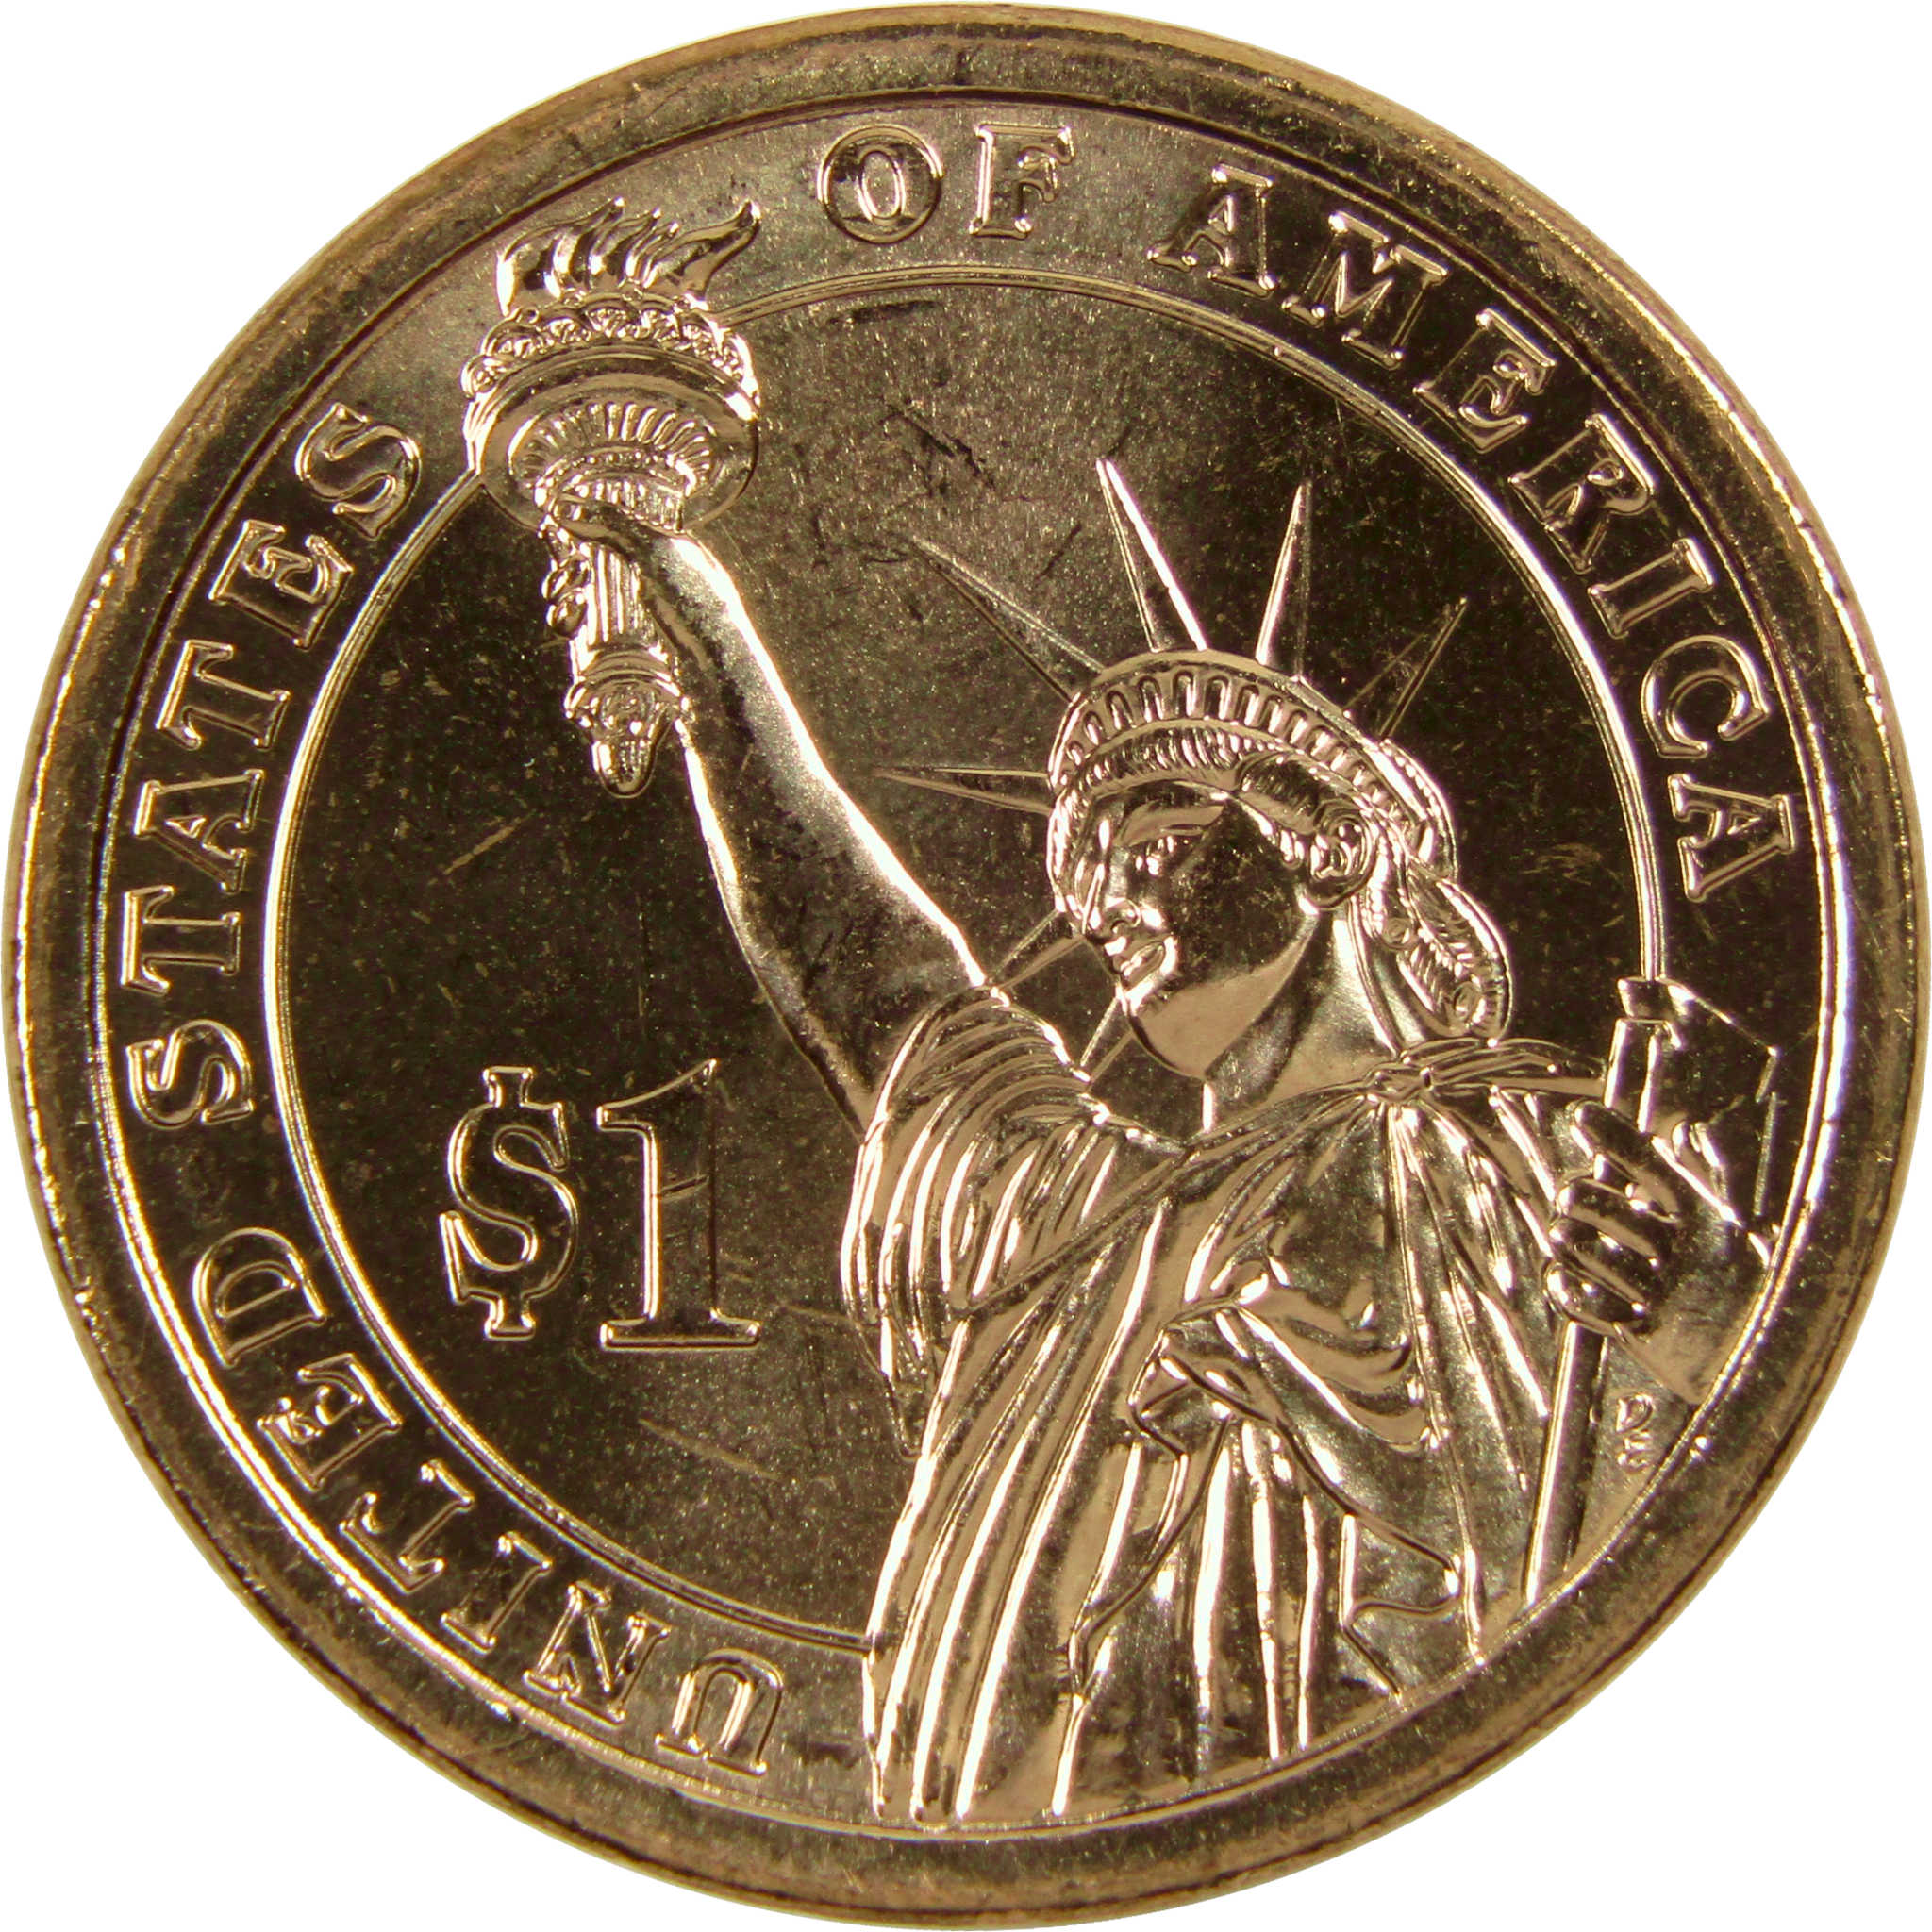 2007 D John Adams Presidential Dollar BU Uncirculated $1 Coin